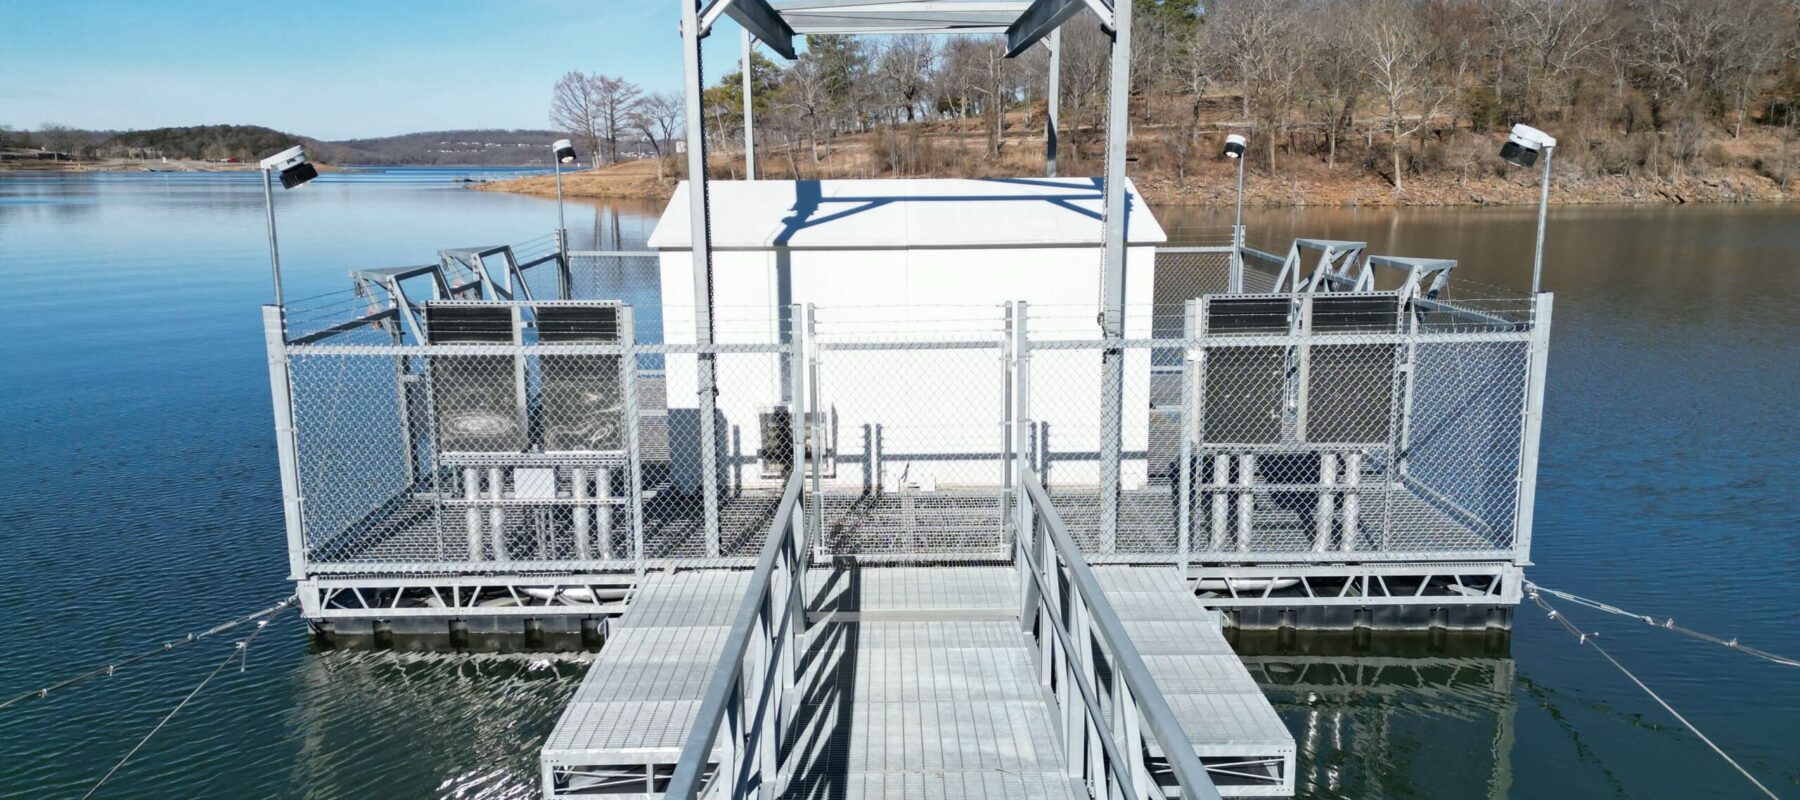 municipal water pump station on floating dock